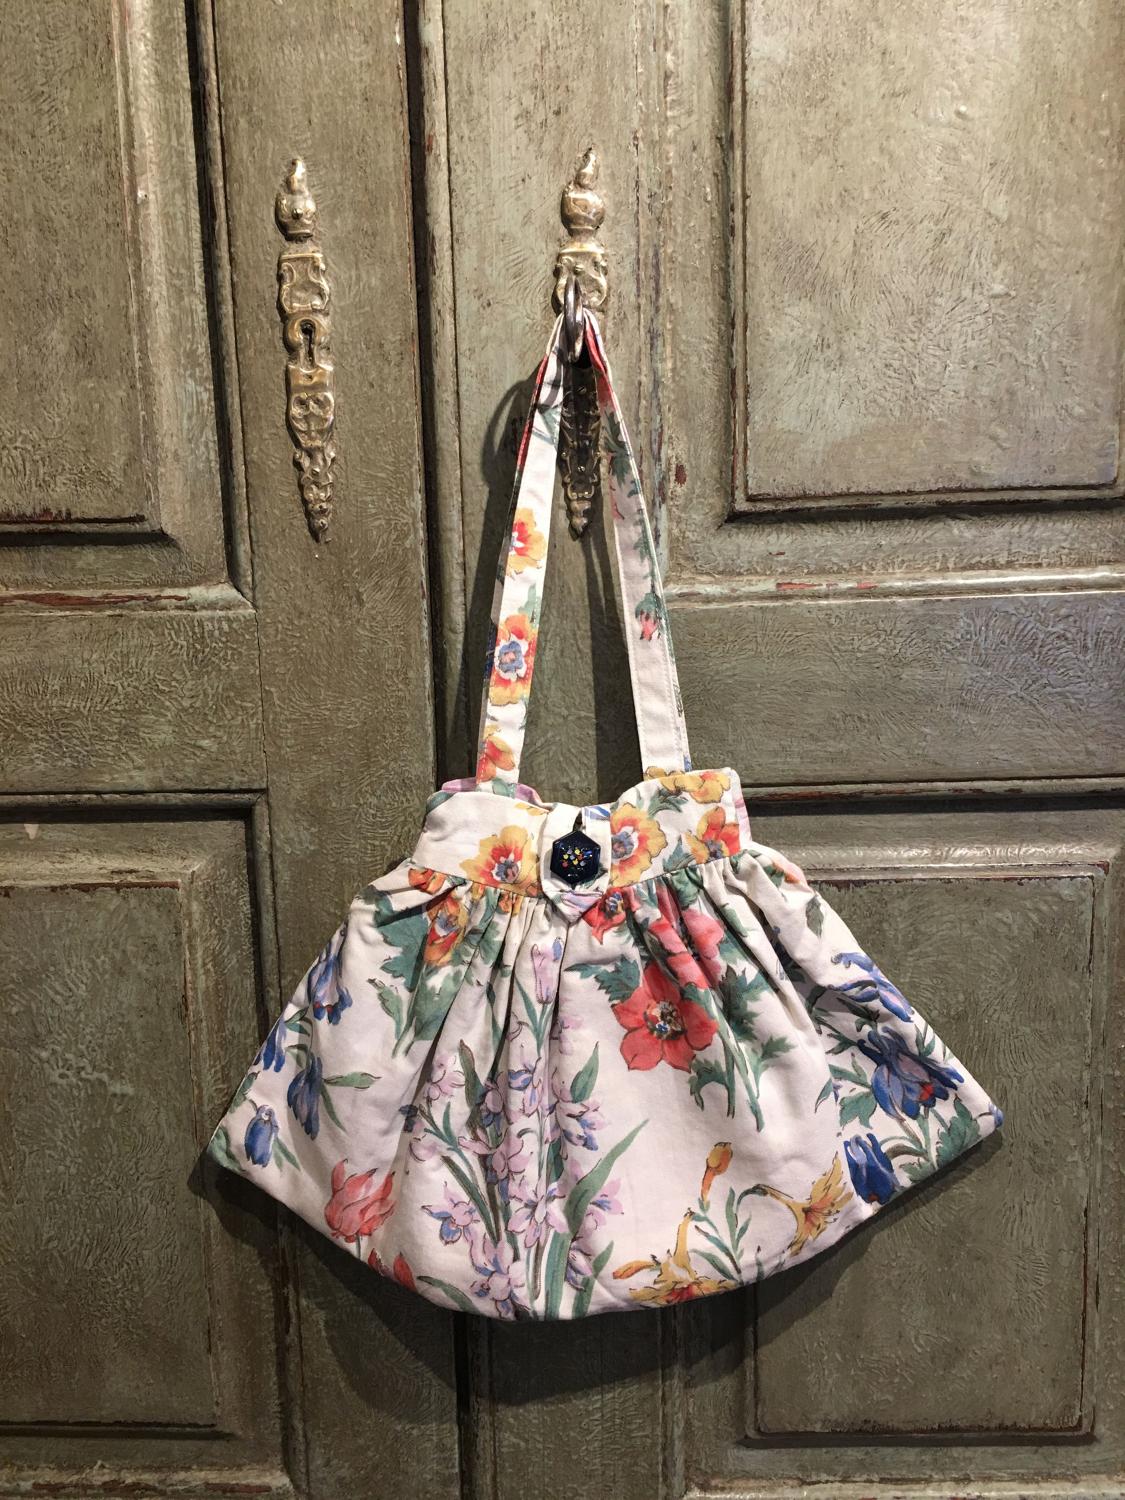 Vintage fabric handbag handcrafted by Niki Fretwell